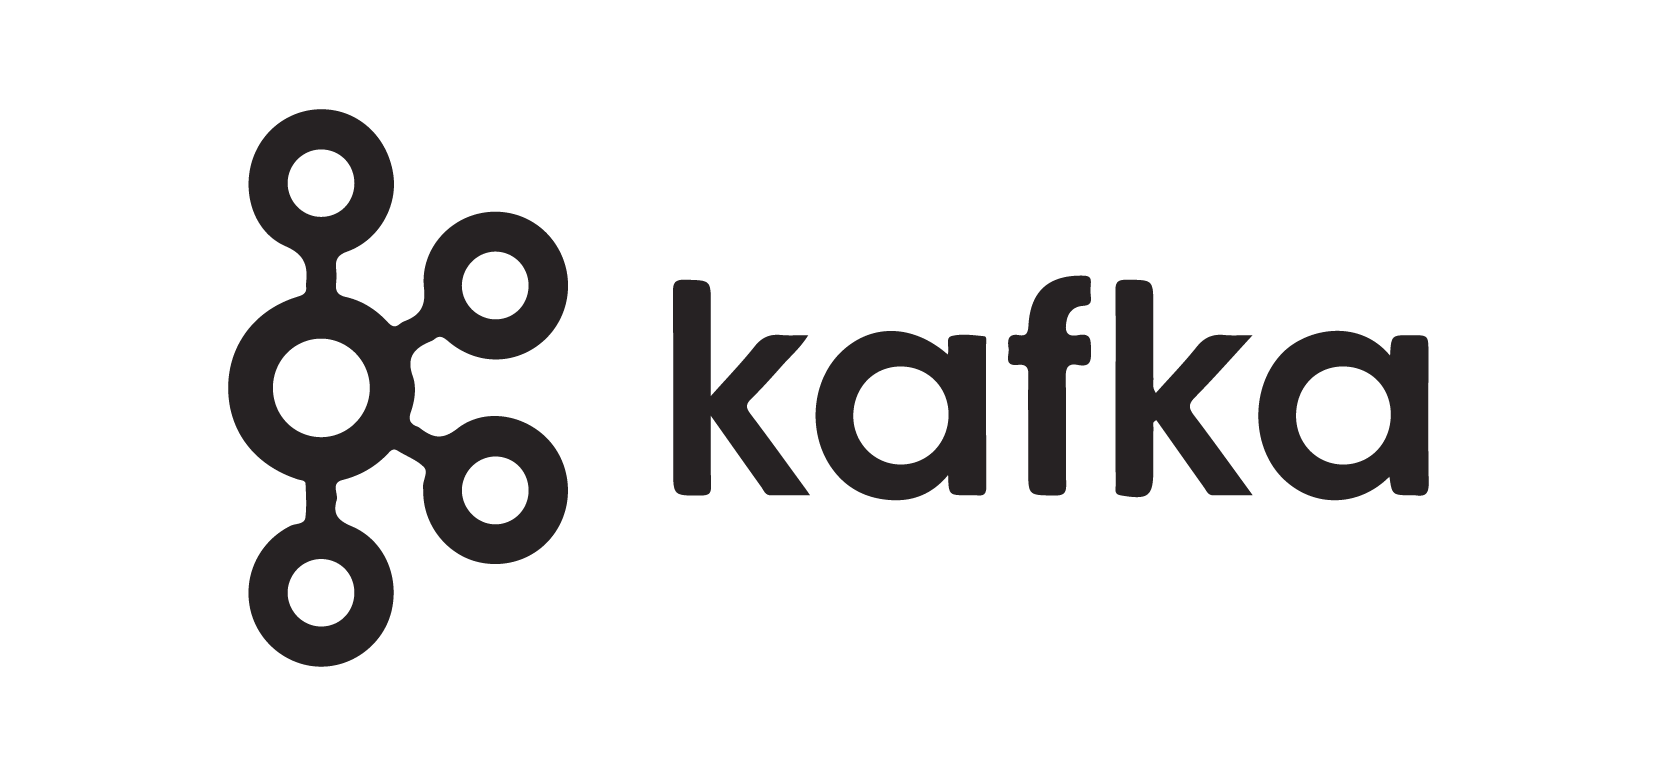 What is Kafka Monitoring?